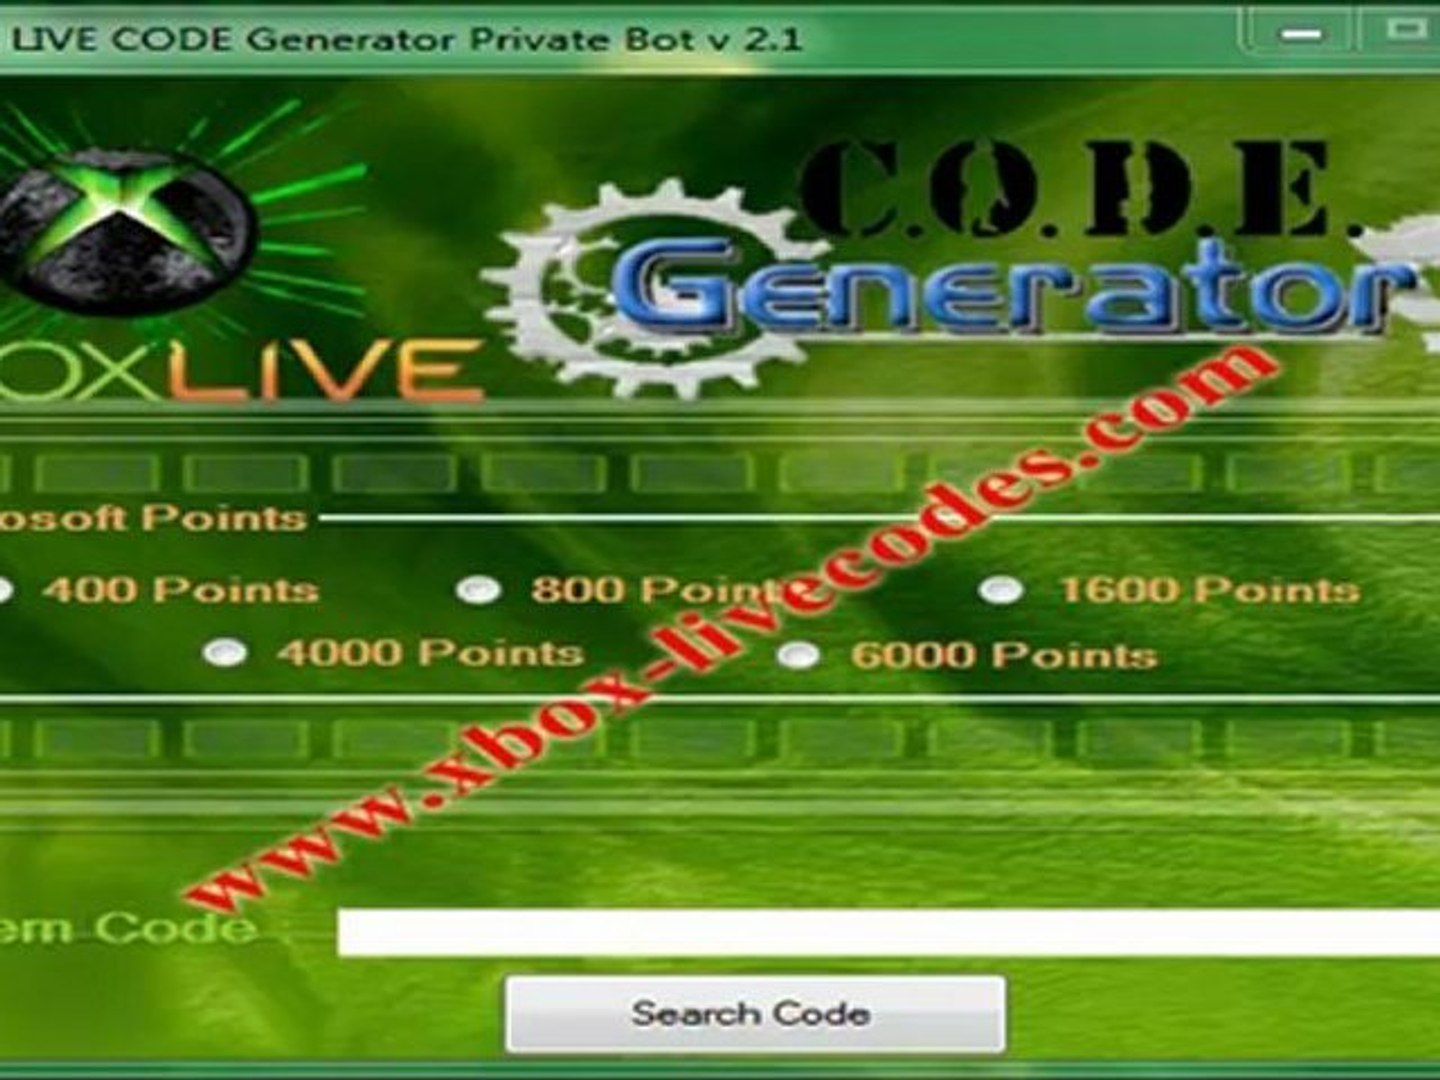 Free Xbox Live Gold Membership Code Generator v3.1 - video Dailymotion